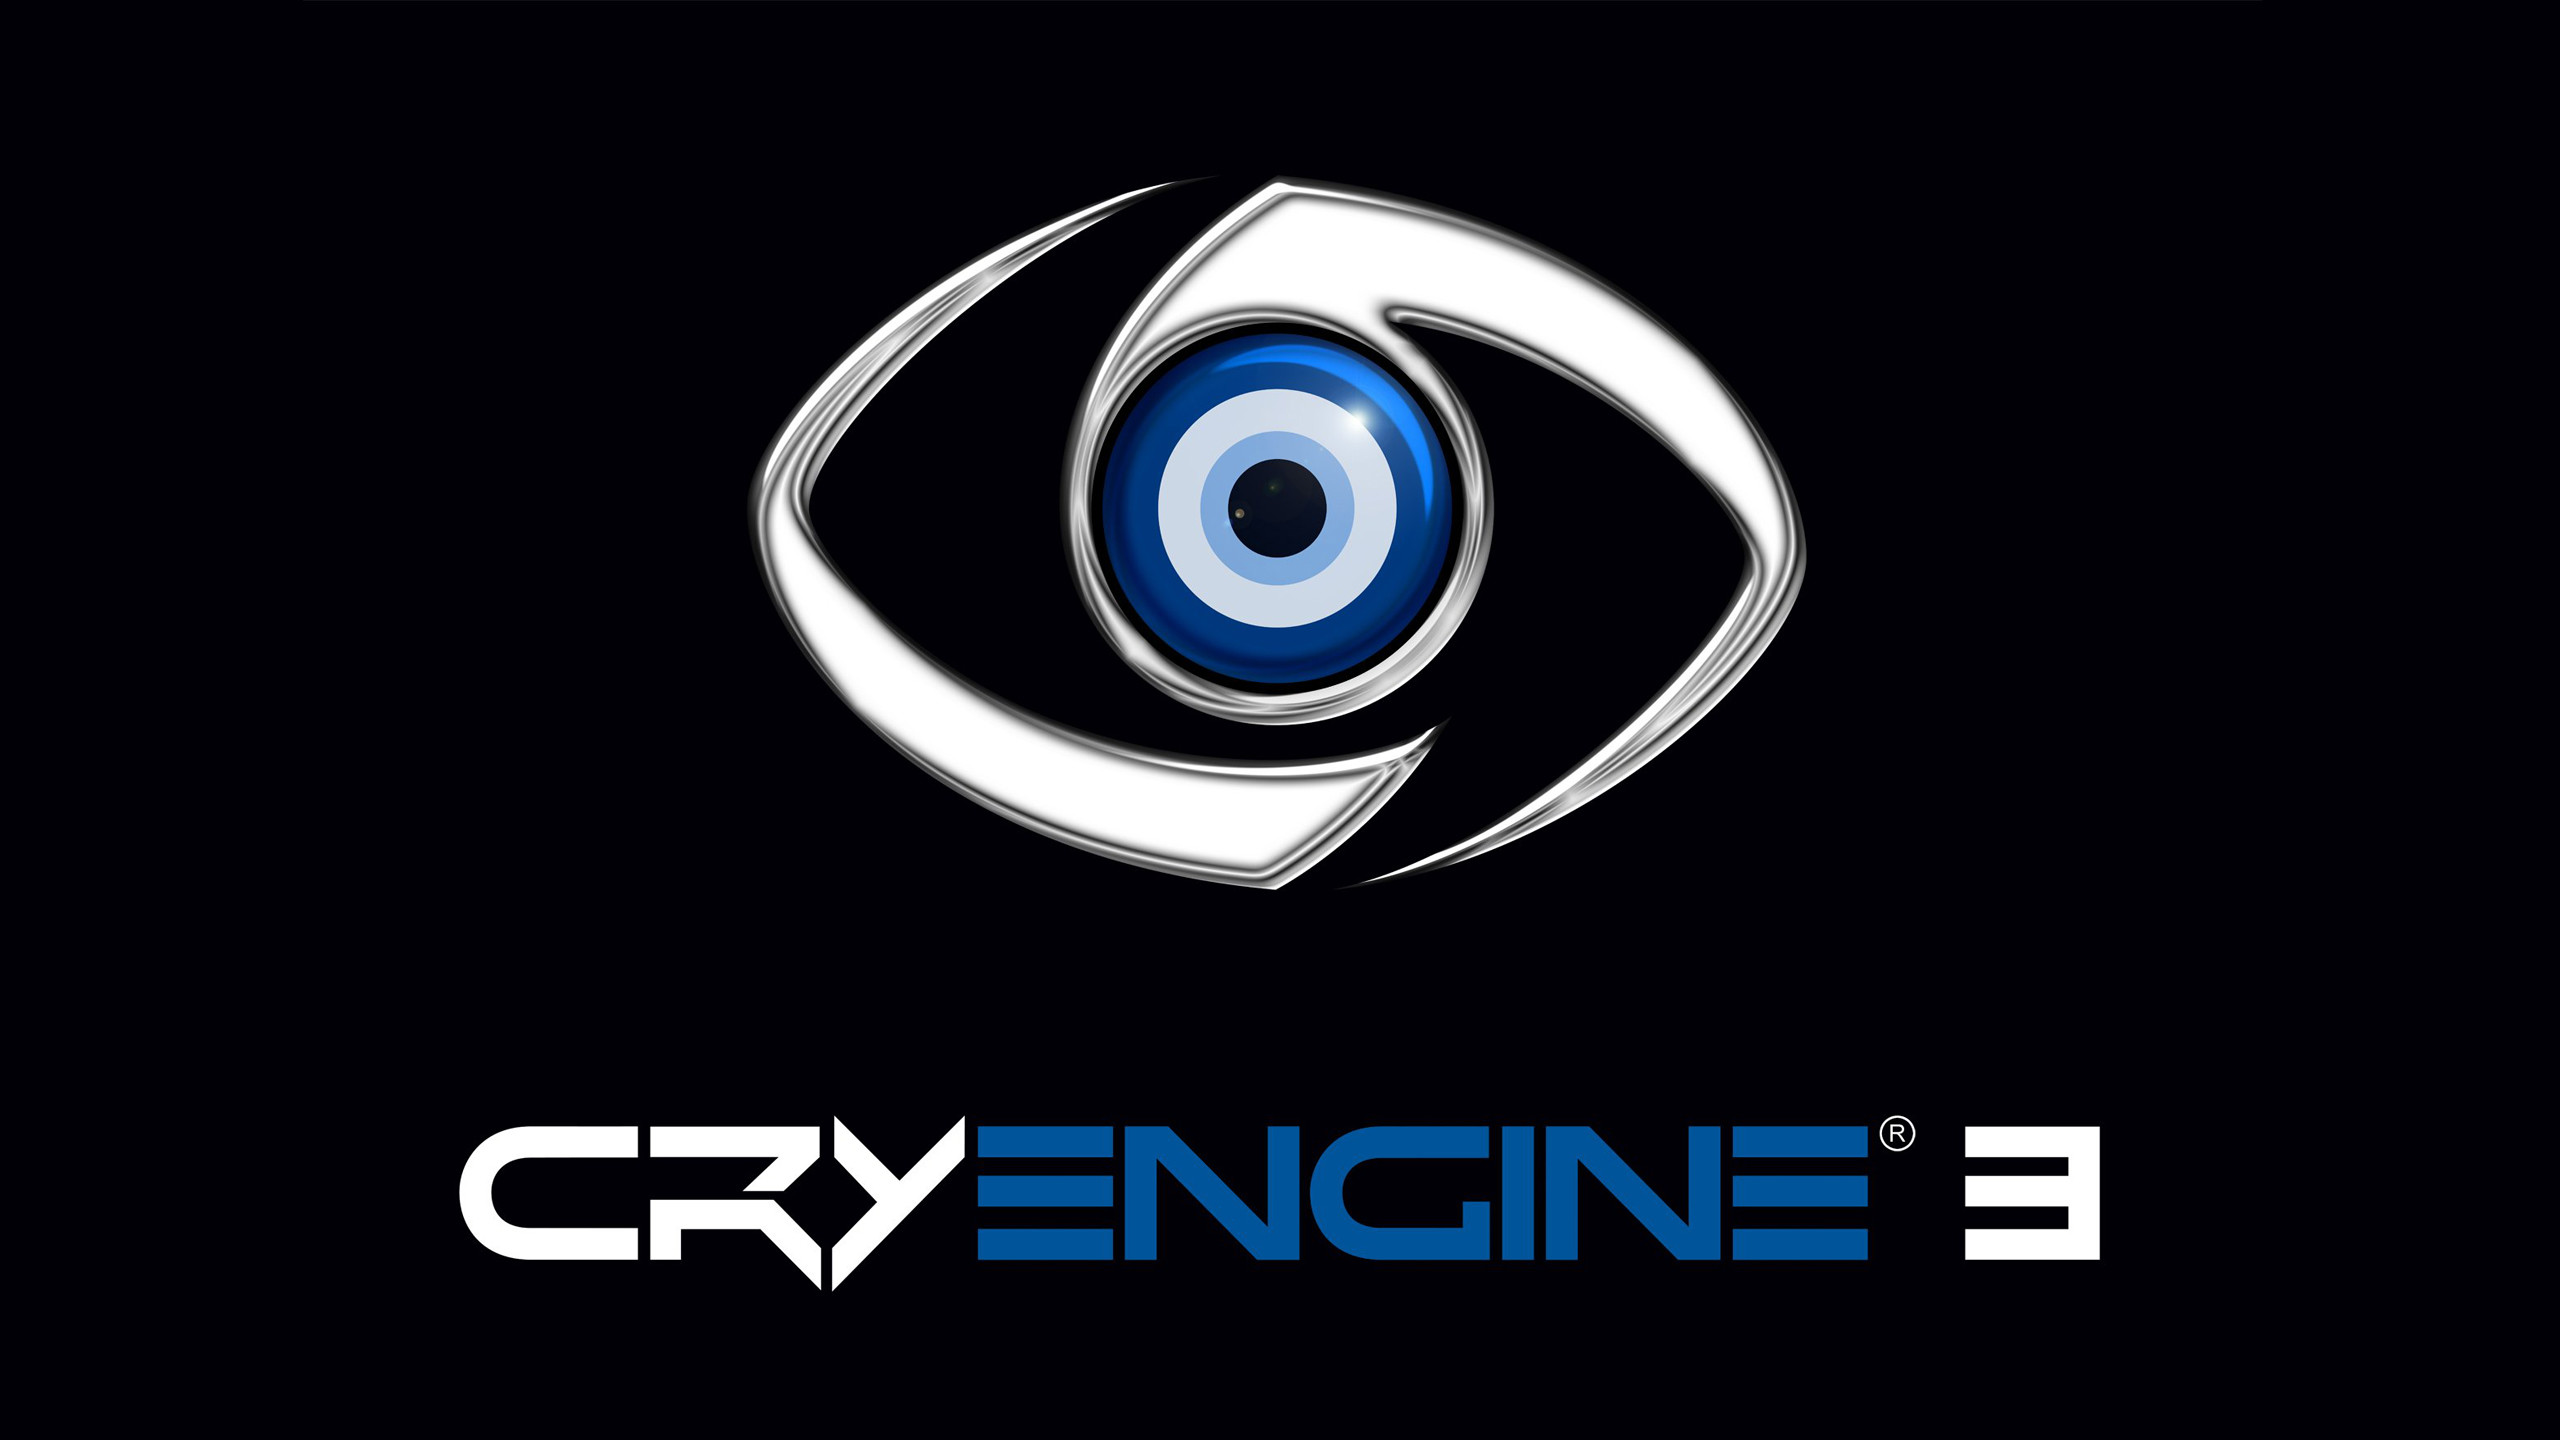 2560x1440 Cryengine 3 Logo HD Wallpaper